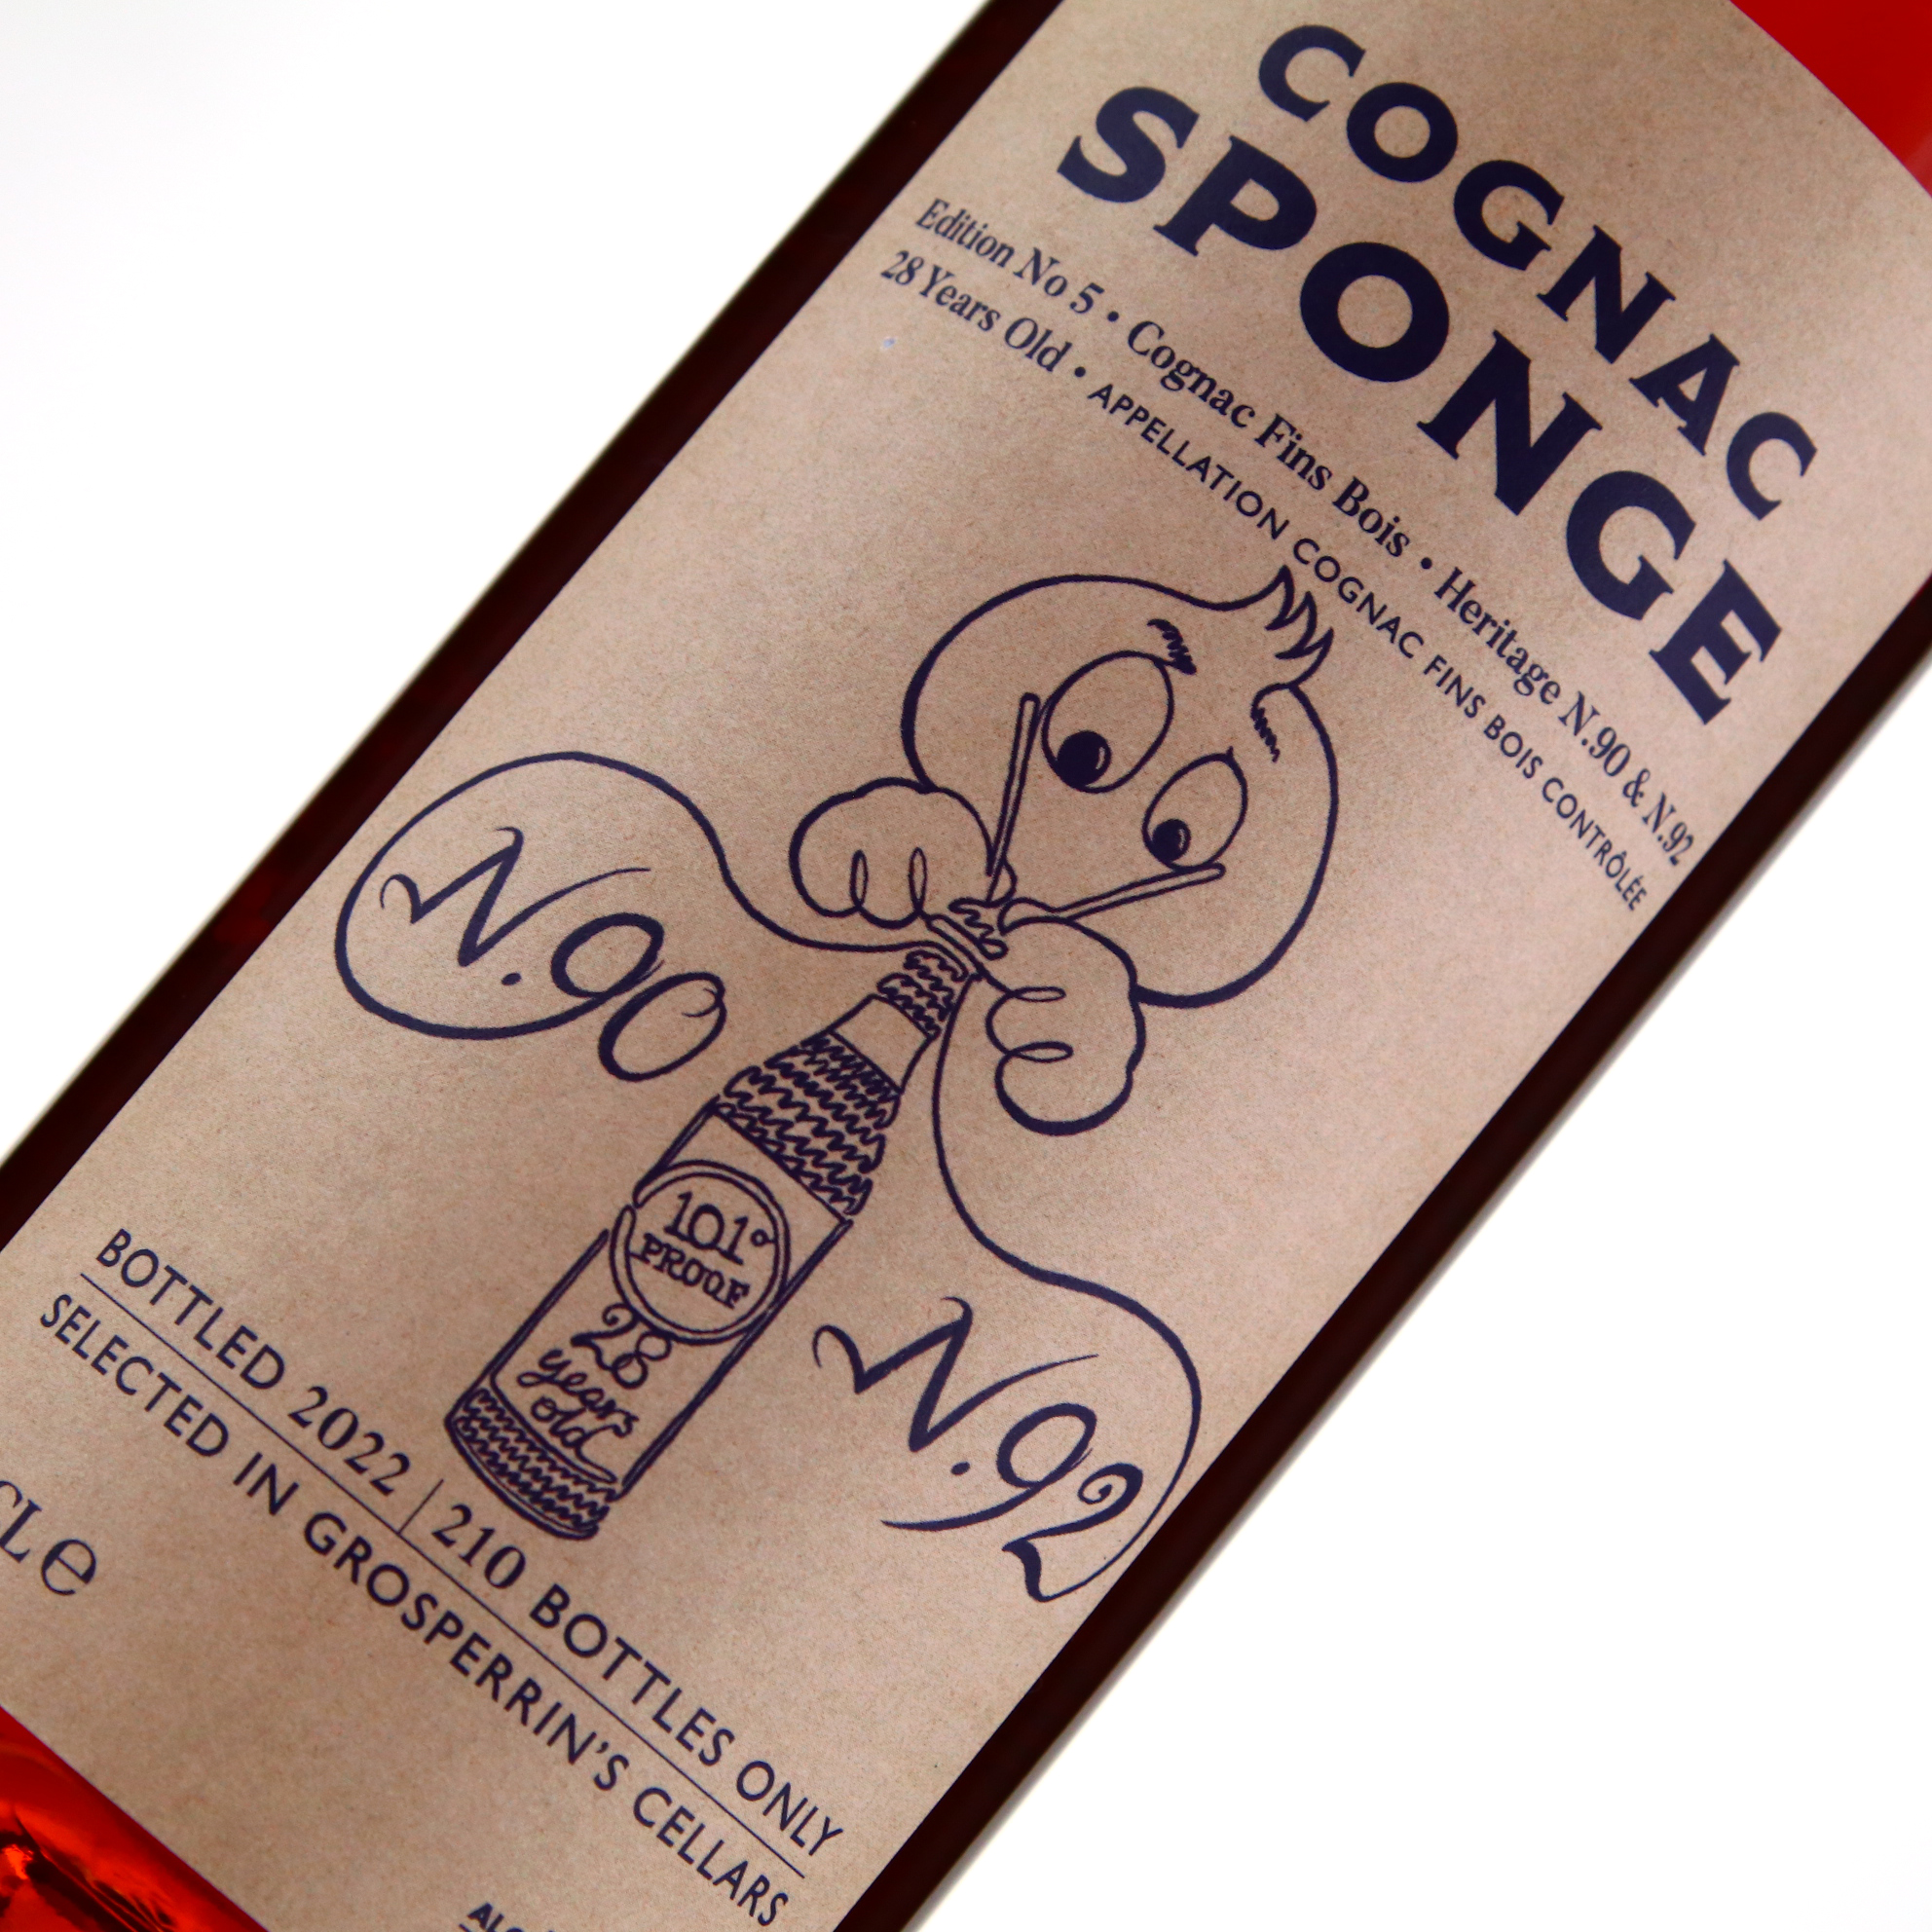 Fins Bois 28 year old Cognac sponge Edition No.5 - hero